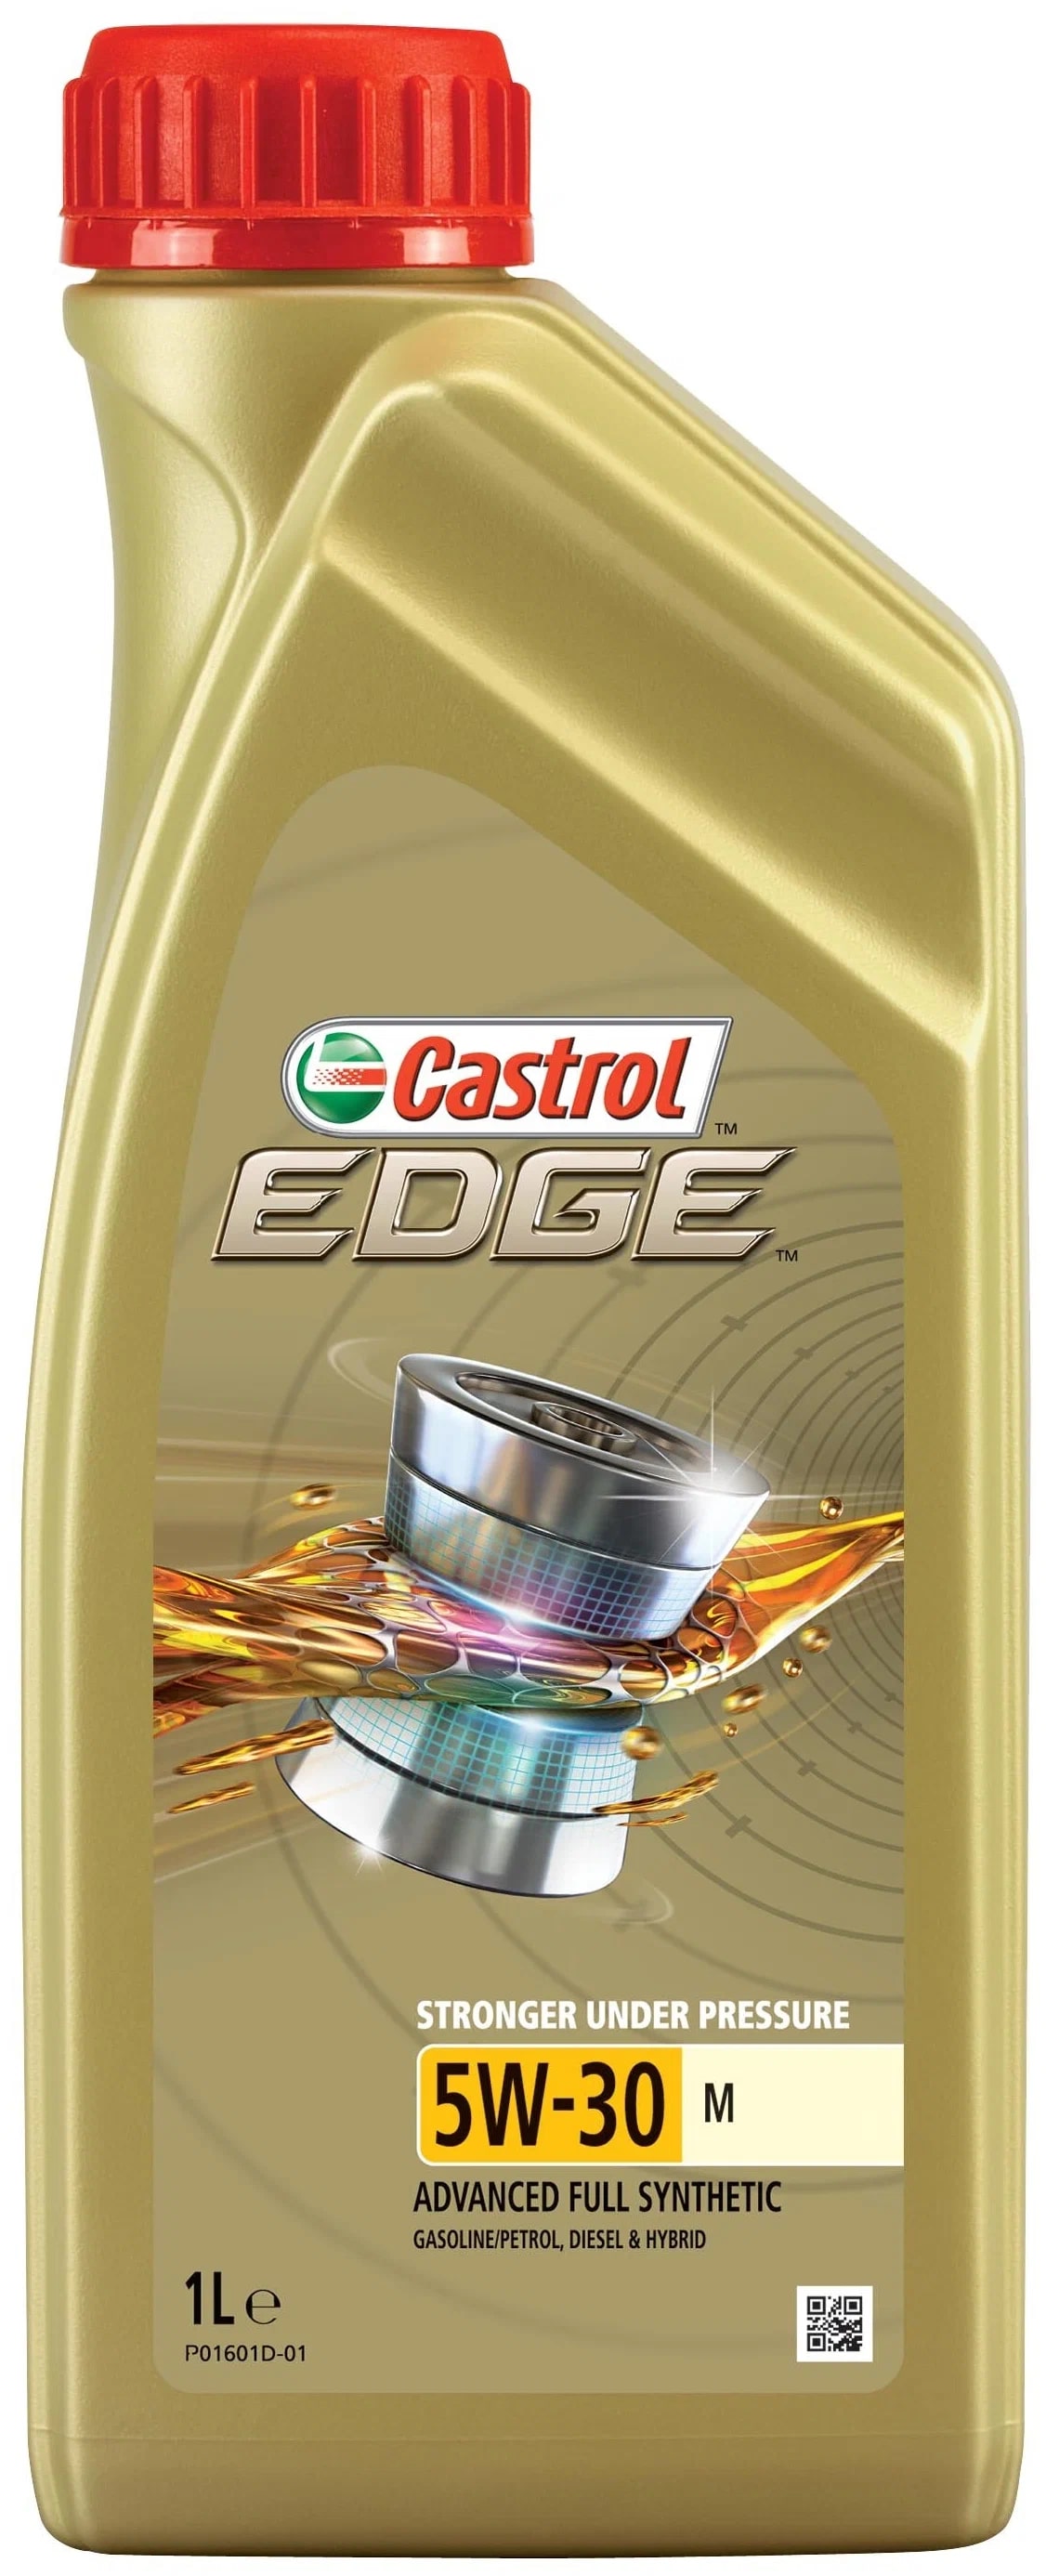 Масло моторное Castrol Кастрол Edge 5W-30 M 1 л 15BF68 Цена -  в .